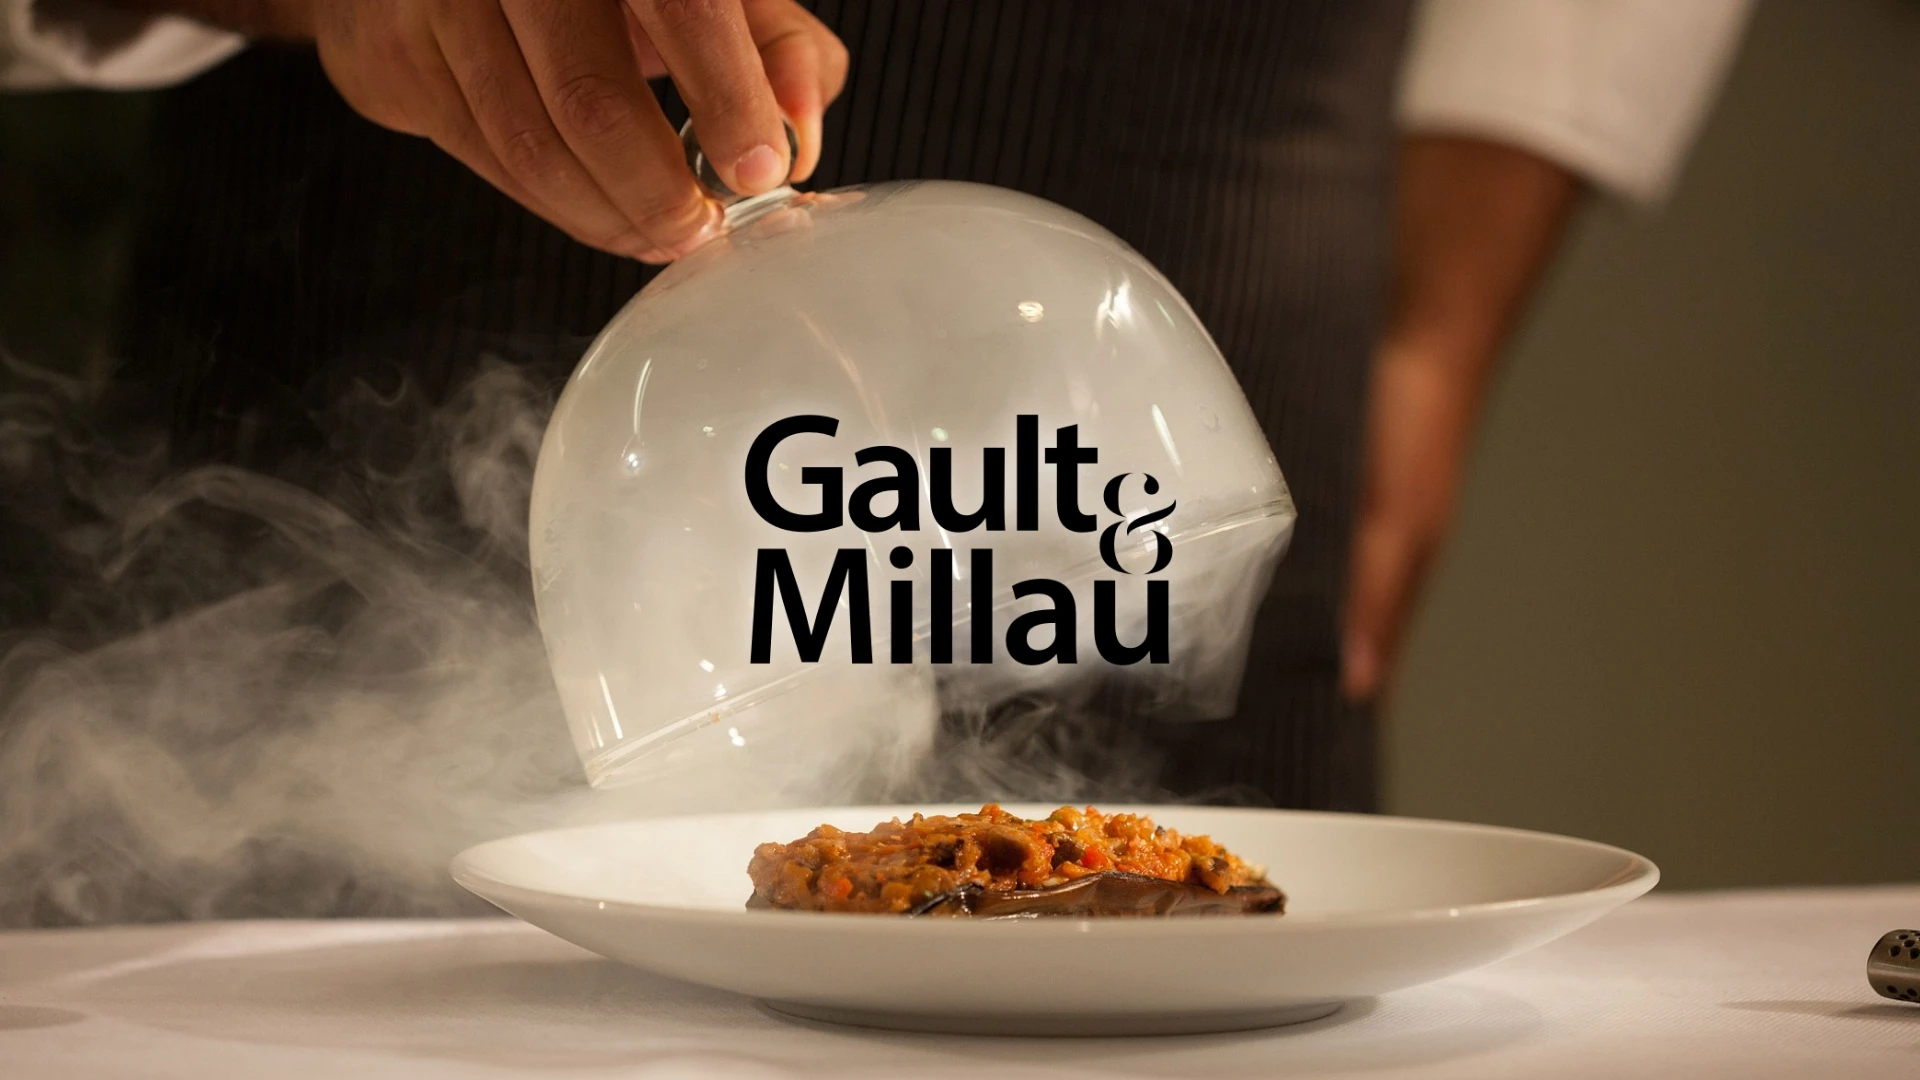 {"en": "Gault&Millau", "nl": "Gault&Millau"}